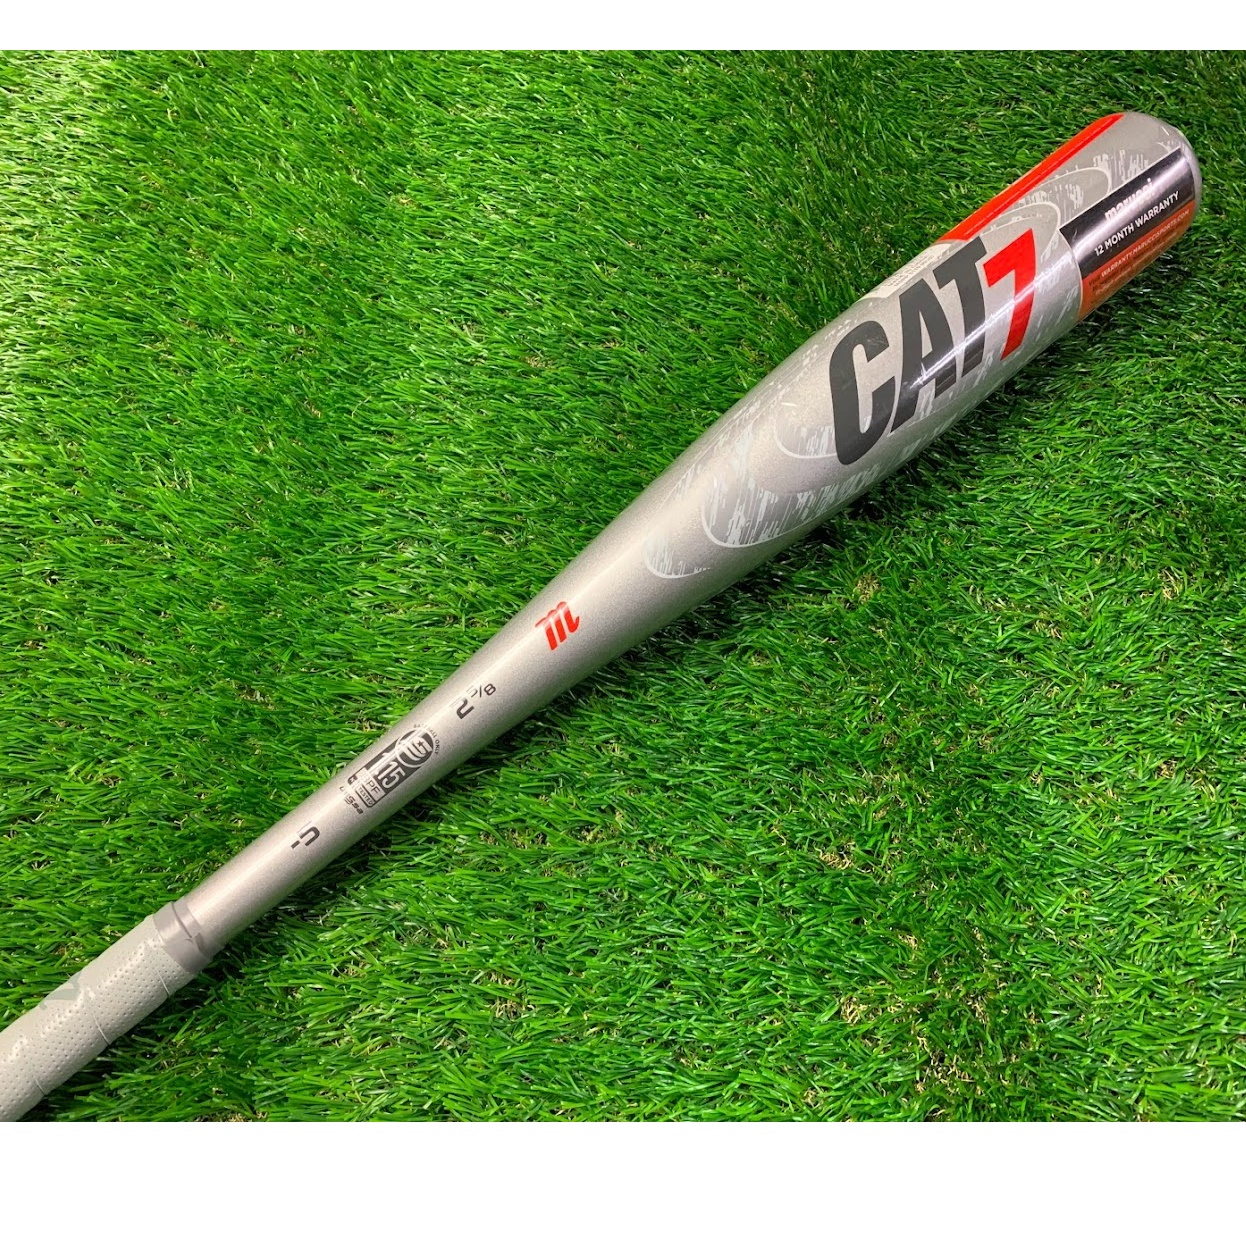 marucci-cat7-silver-5-baseball-bat-31-inch-26-oz-demo MSBC725S-3126-DEMO Marucci  Demo bats are a great opportunity to pick up a high